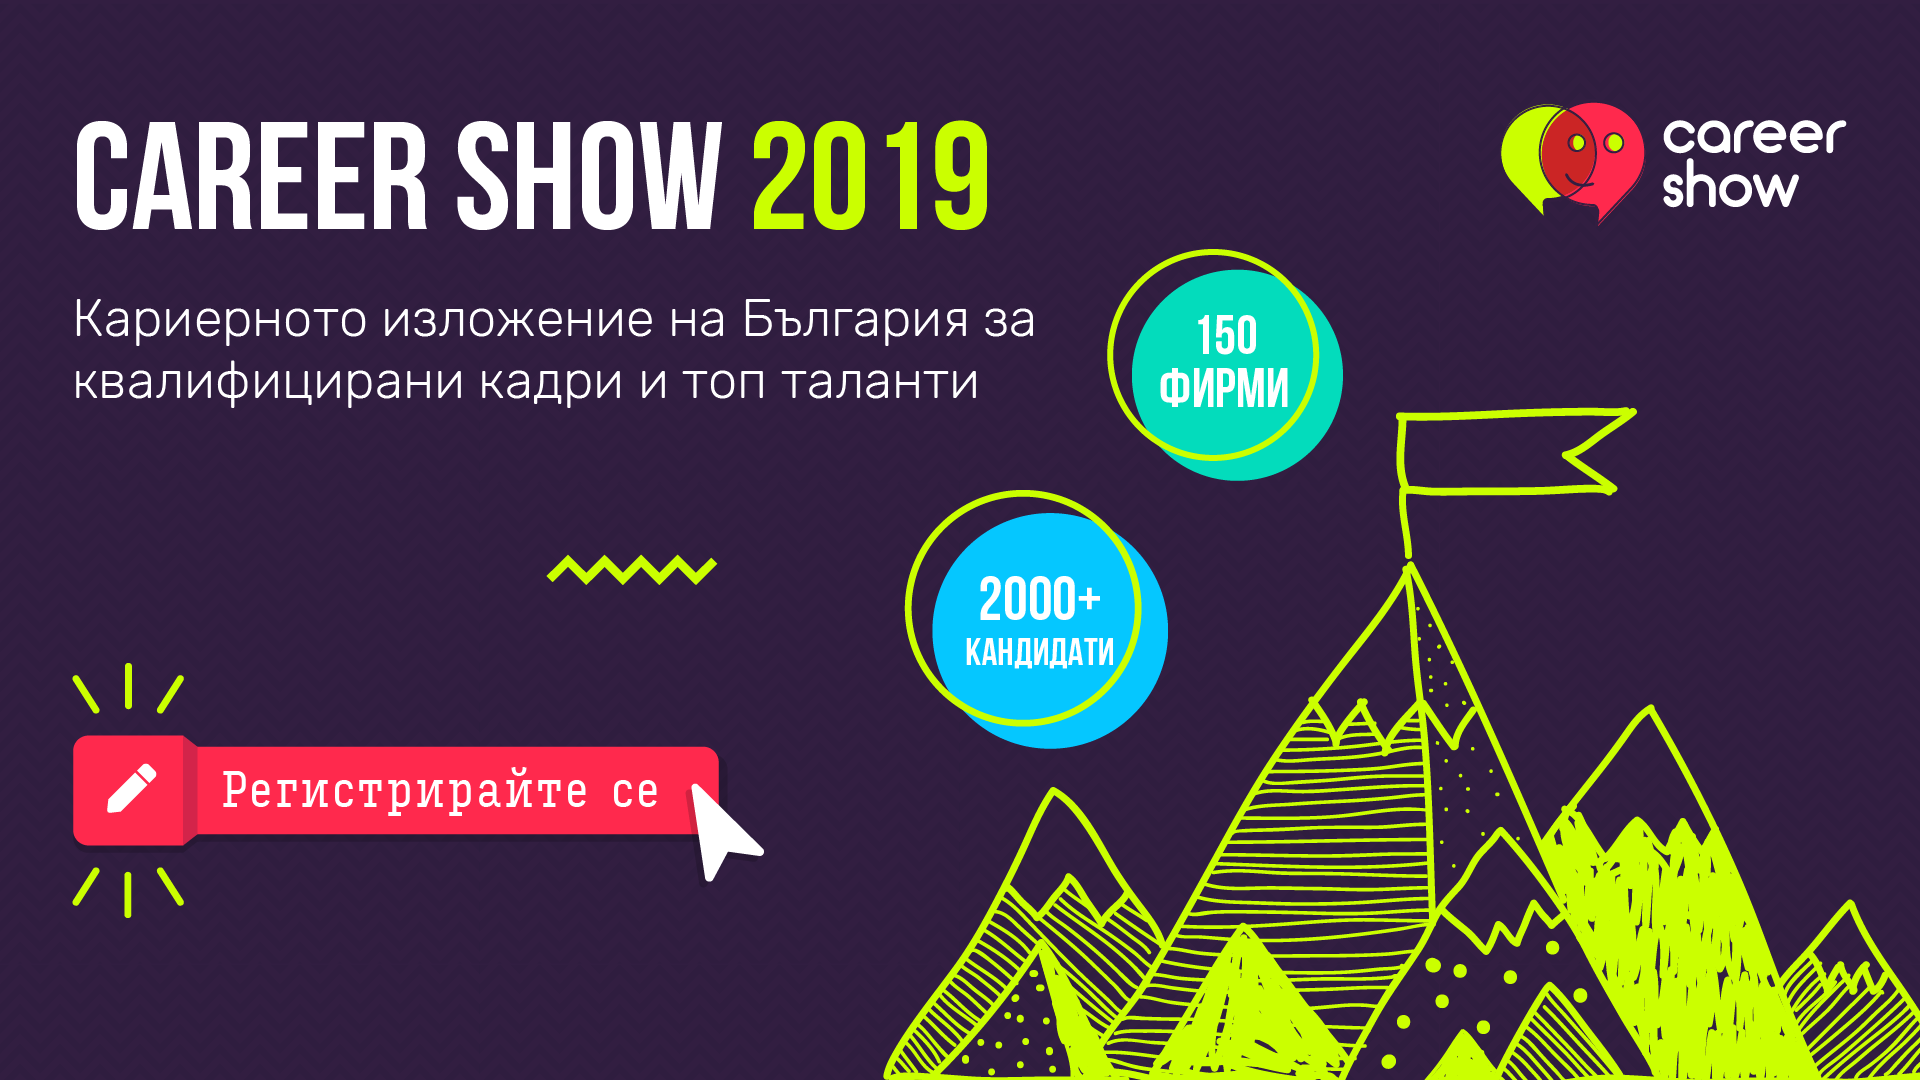 Българска стопанска камара партньор на Career Show 2019